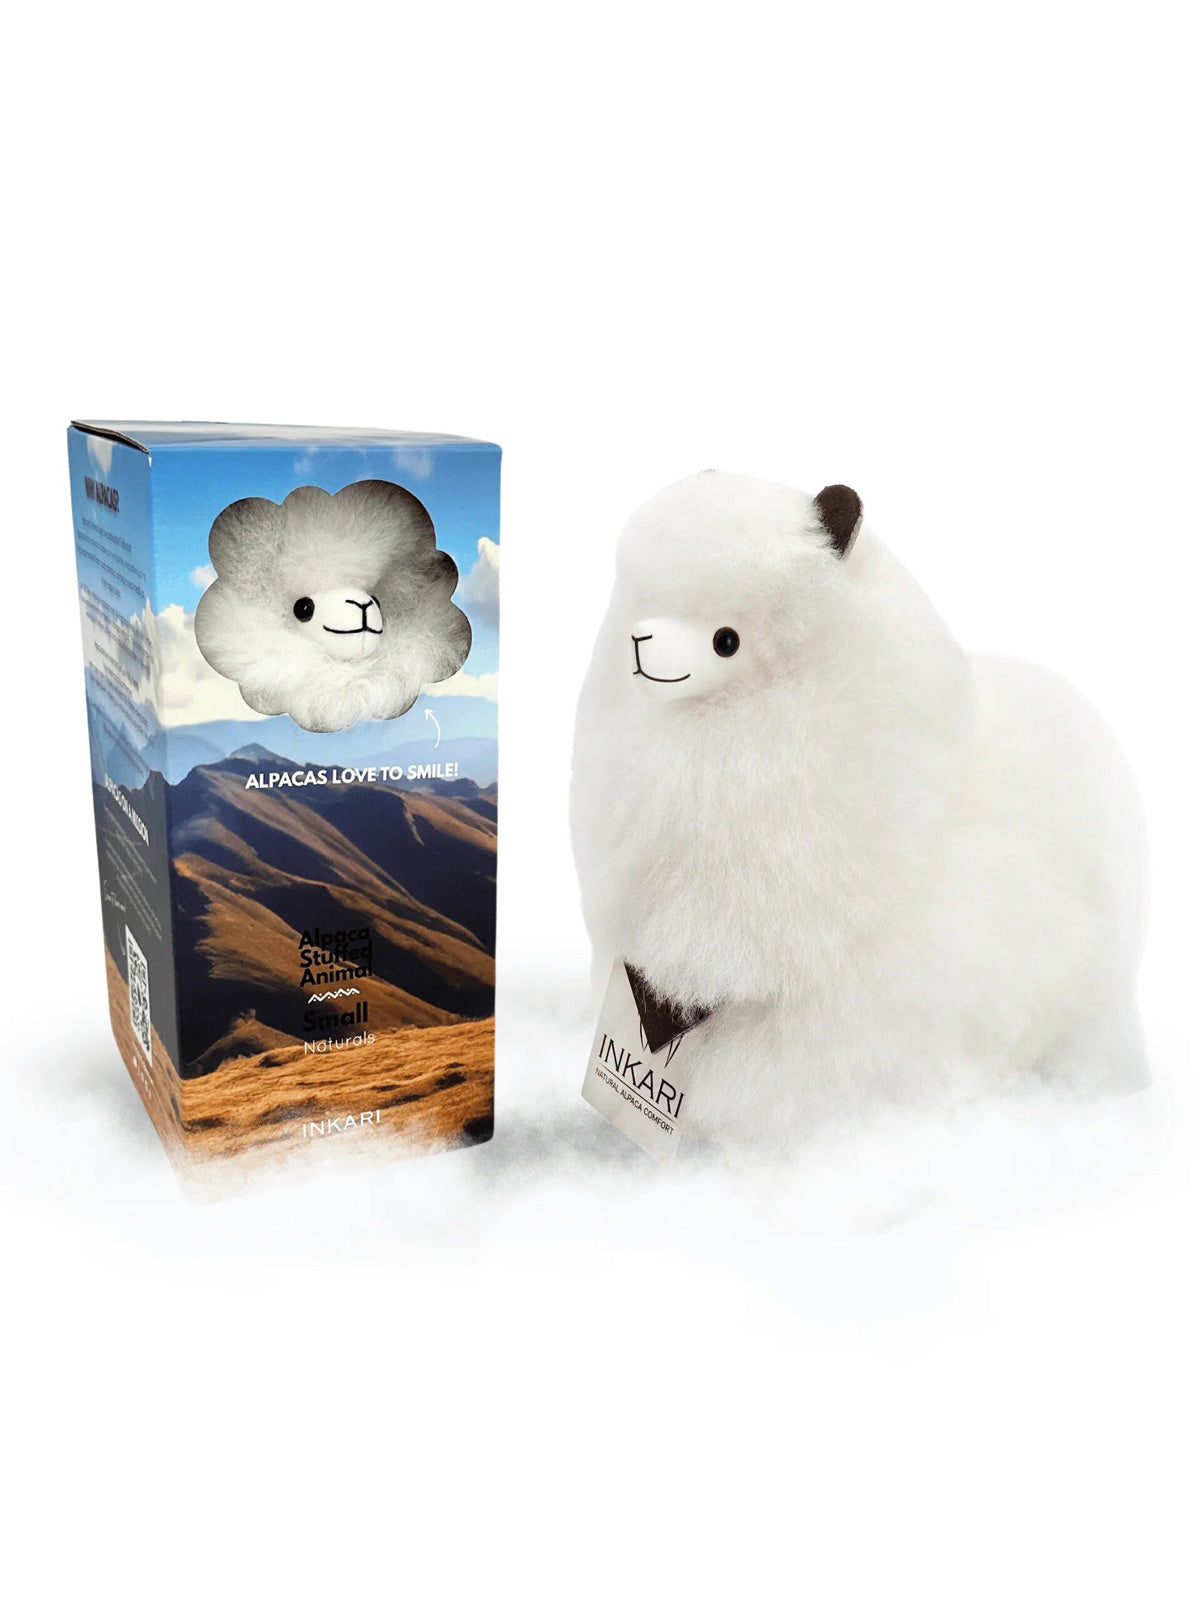 Inkari Alpaca- Μαλακό παιχνίδι -Naturals-IVORY WHITE-Small 23cm